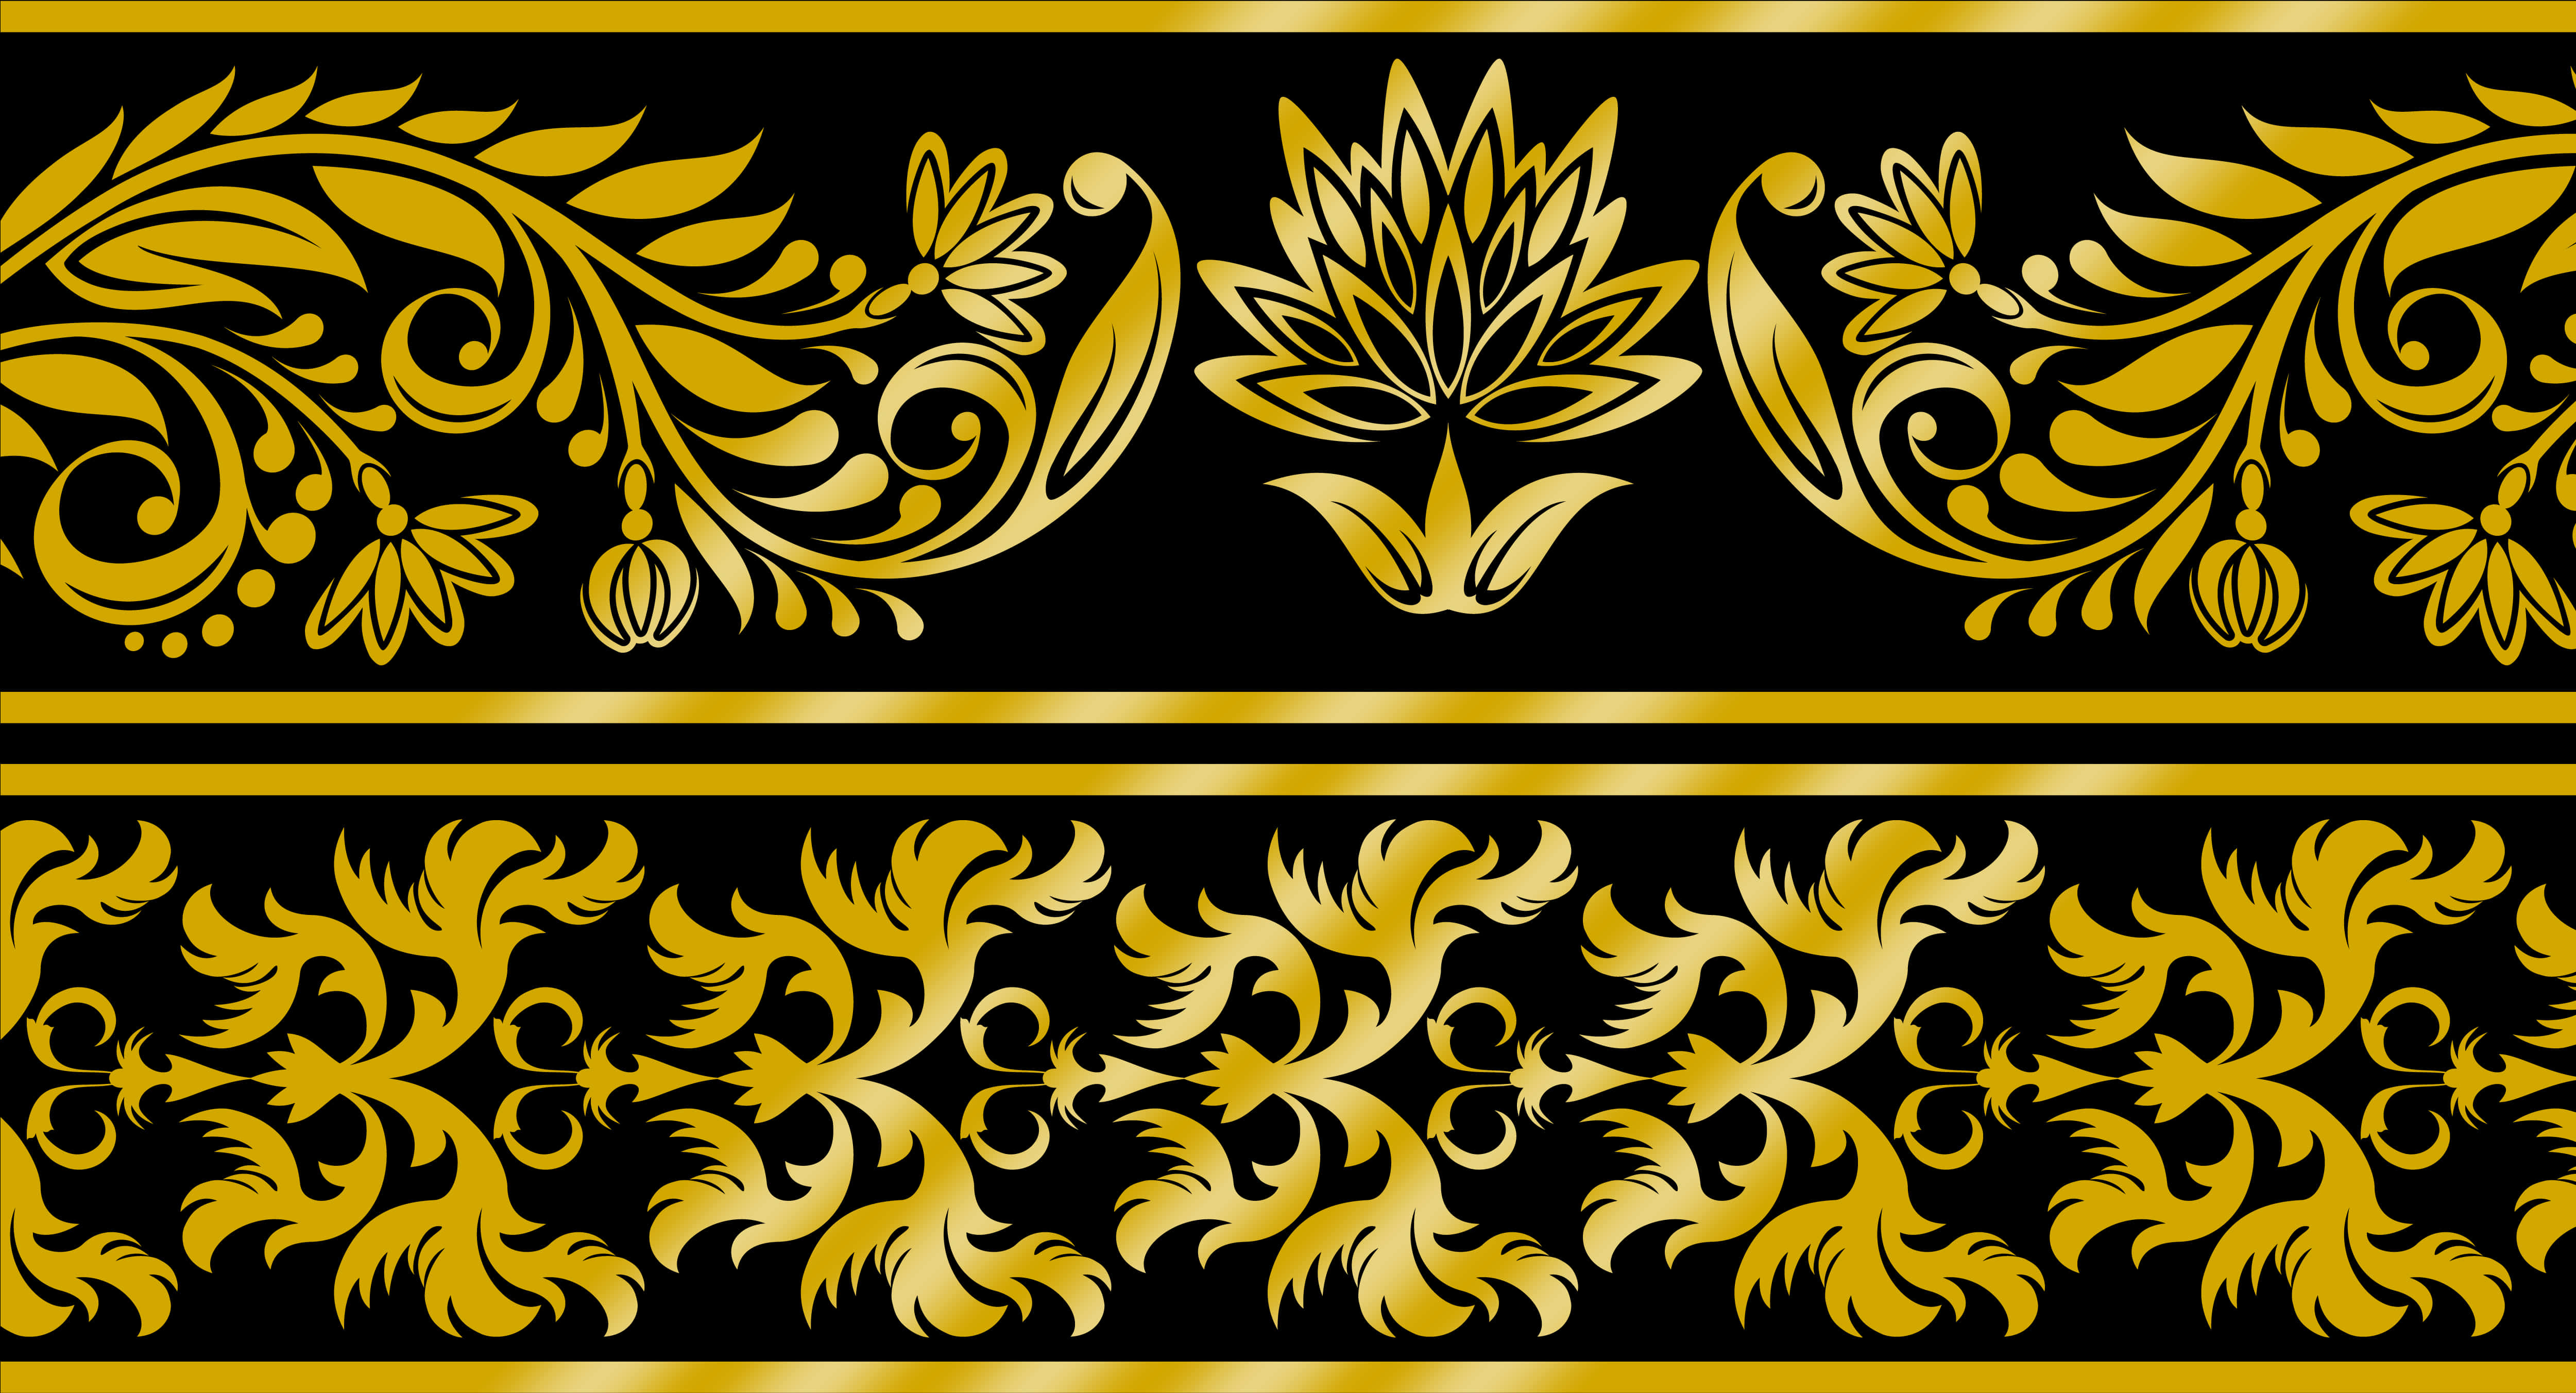 A Gold And Black Floral Design